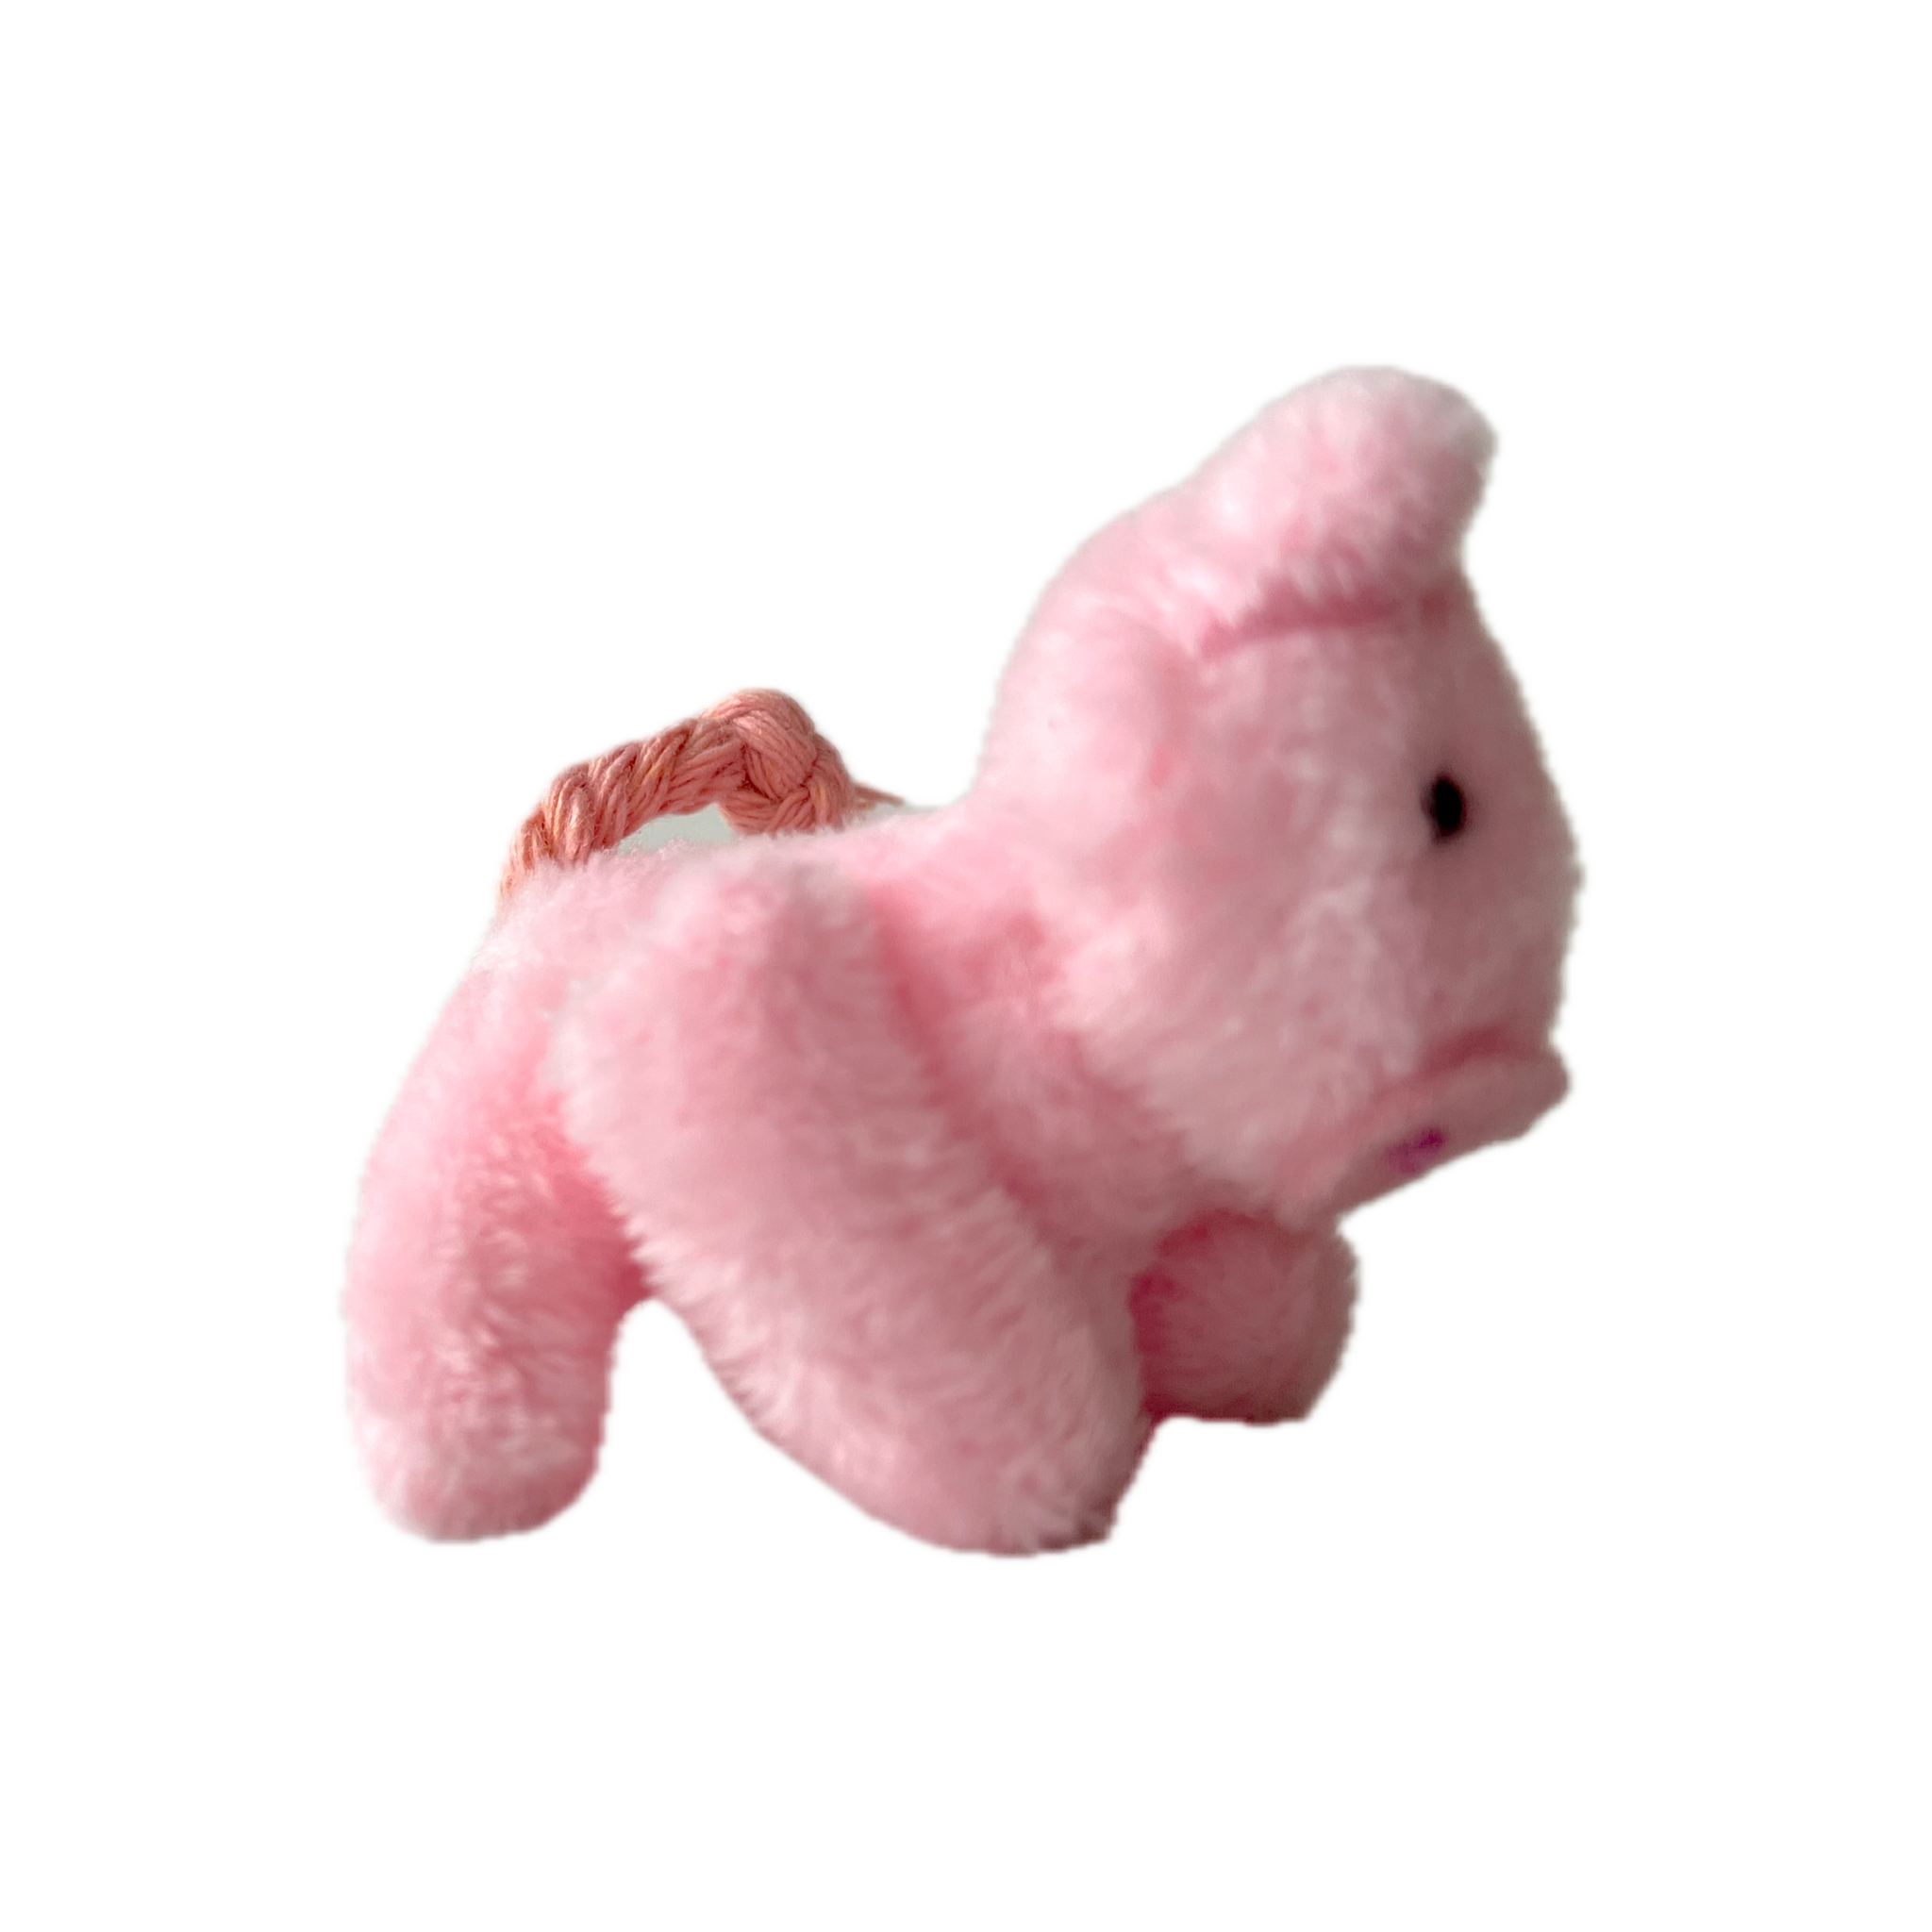 Small Stuffed Pig (Pink)